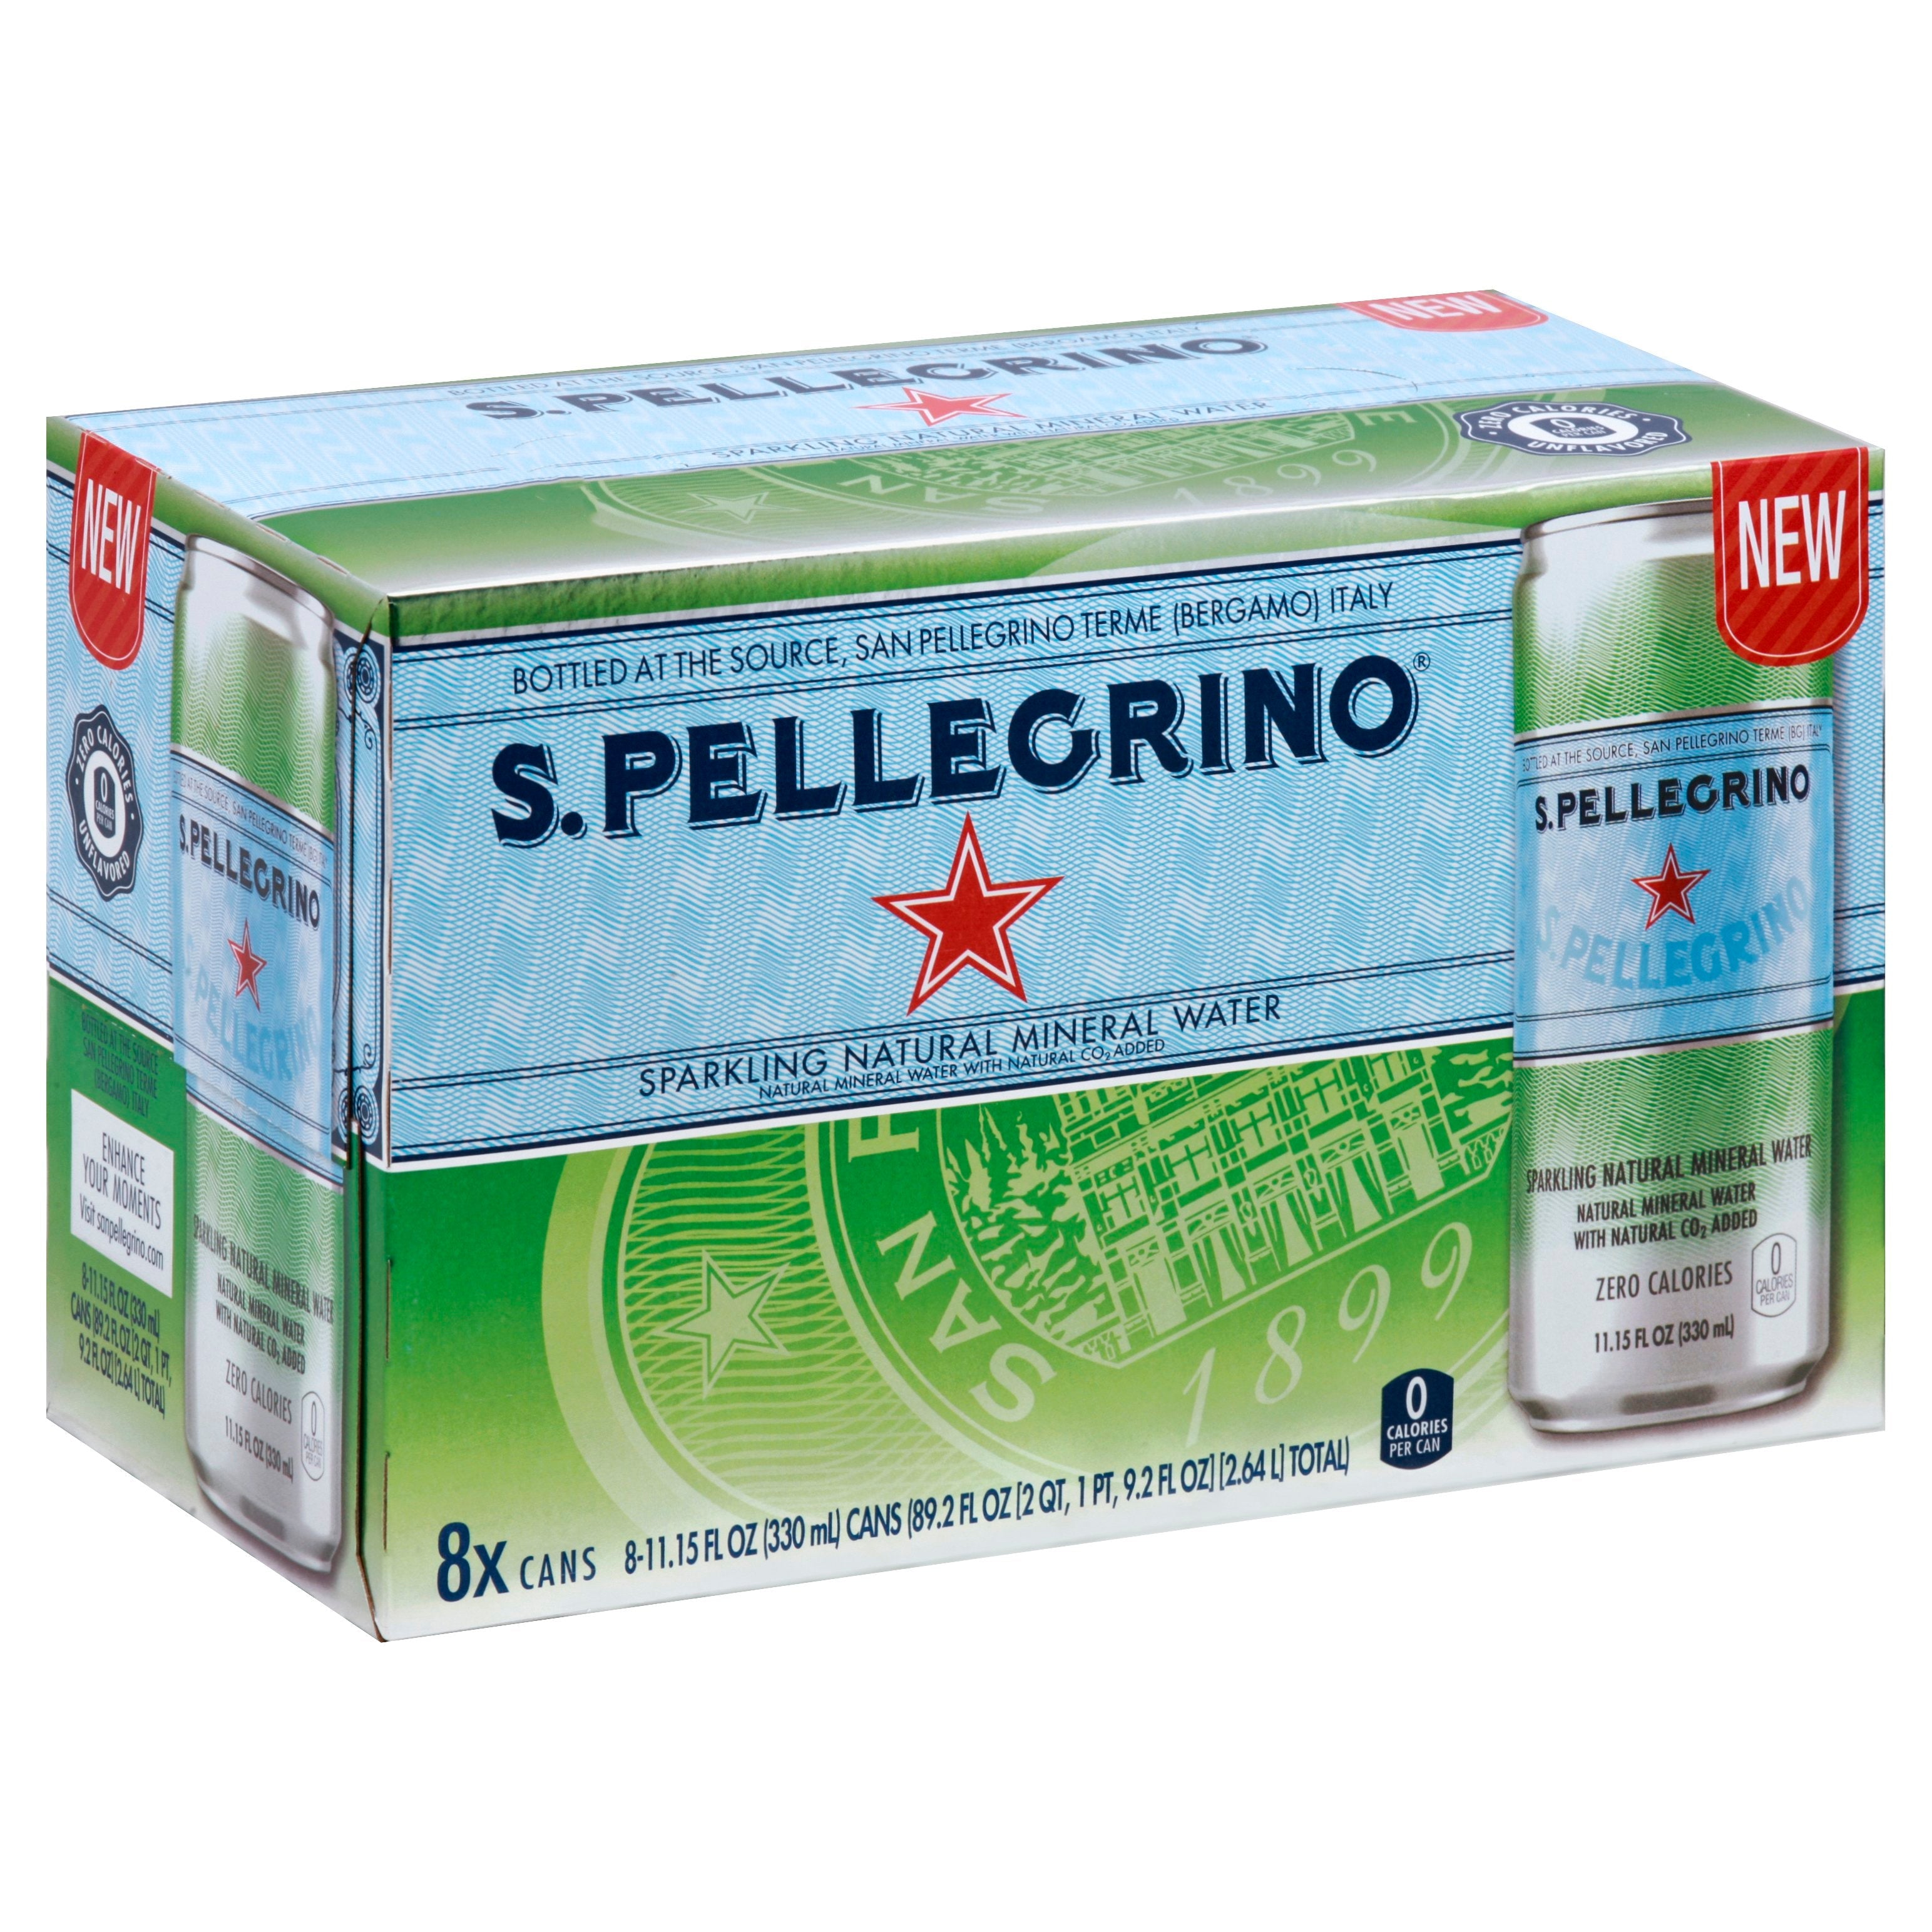 San Pellegrino Sparkling Natural Mineral w-ater 1 liter Glass Bottles -  Pack of 12 